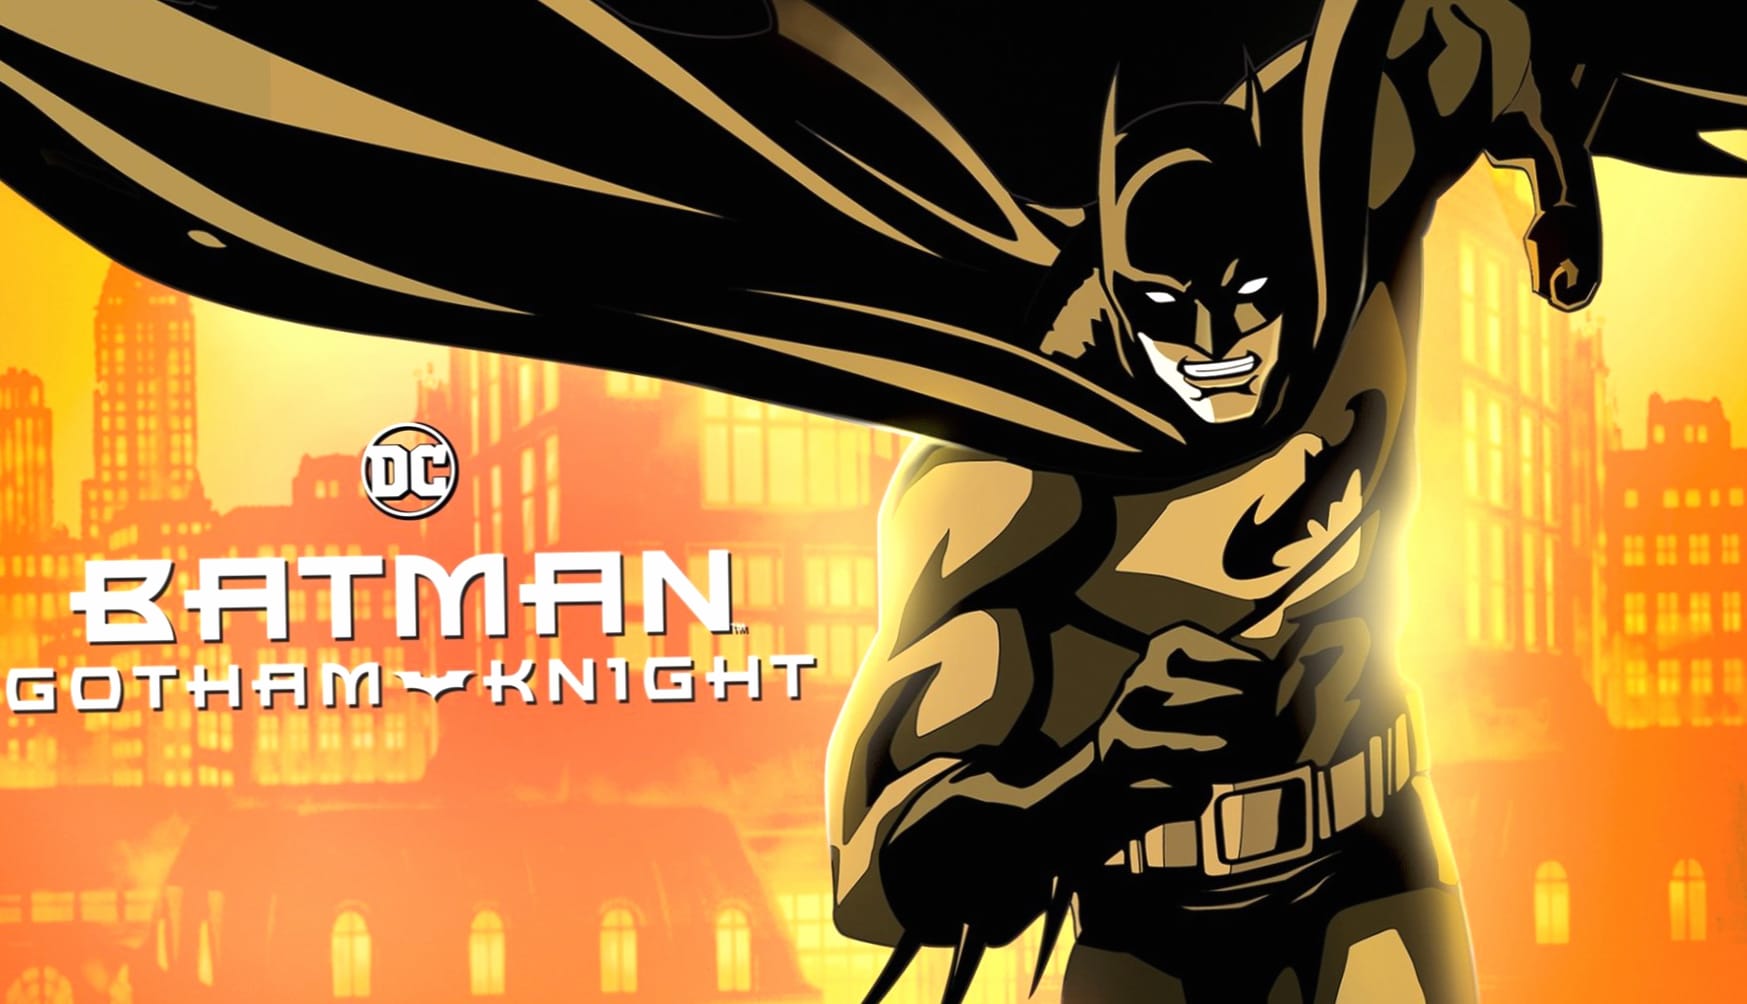 Batman Gotham Knight at 1280 x 960 size wallpapers HD quality